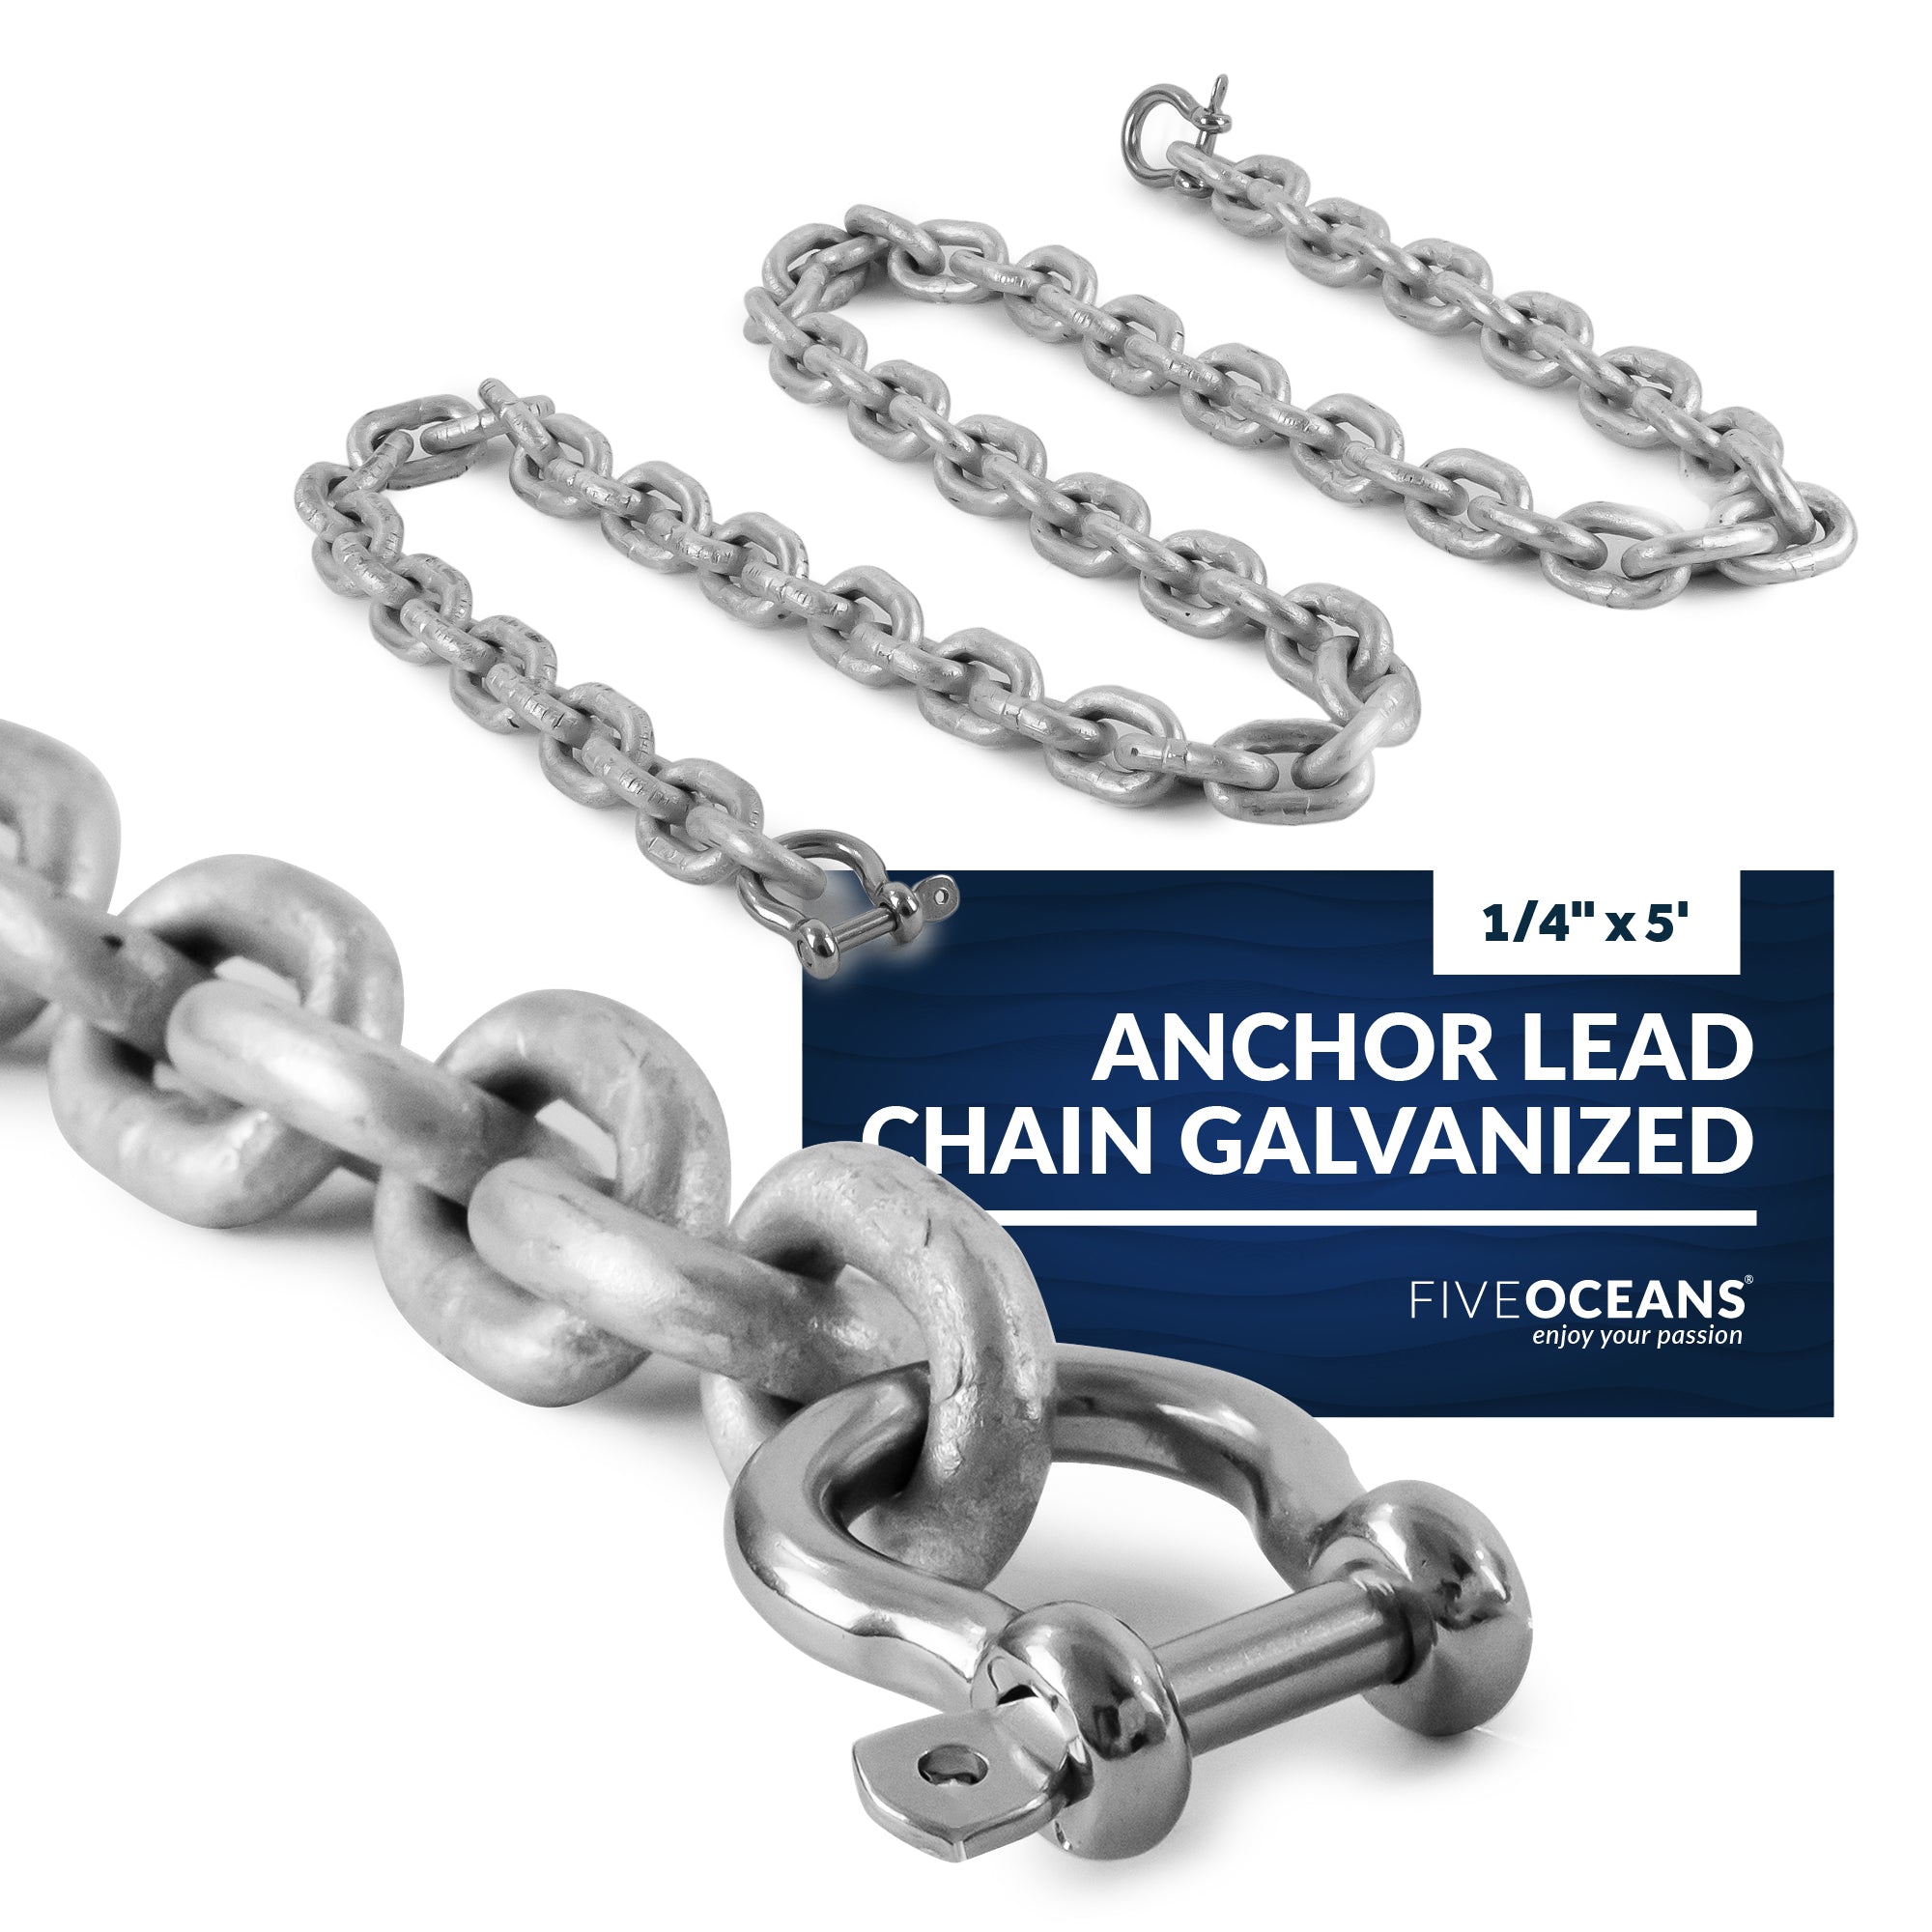 Anchor Lead Chain 1/4" x 5', HTG4 Galvanized Steel - FO4489-G5